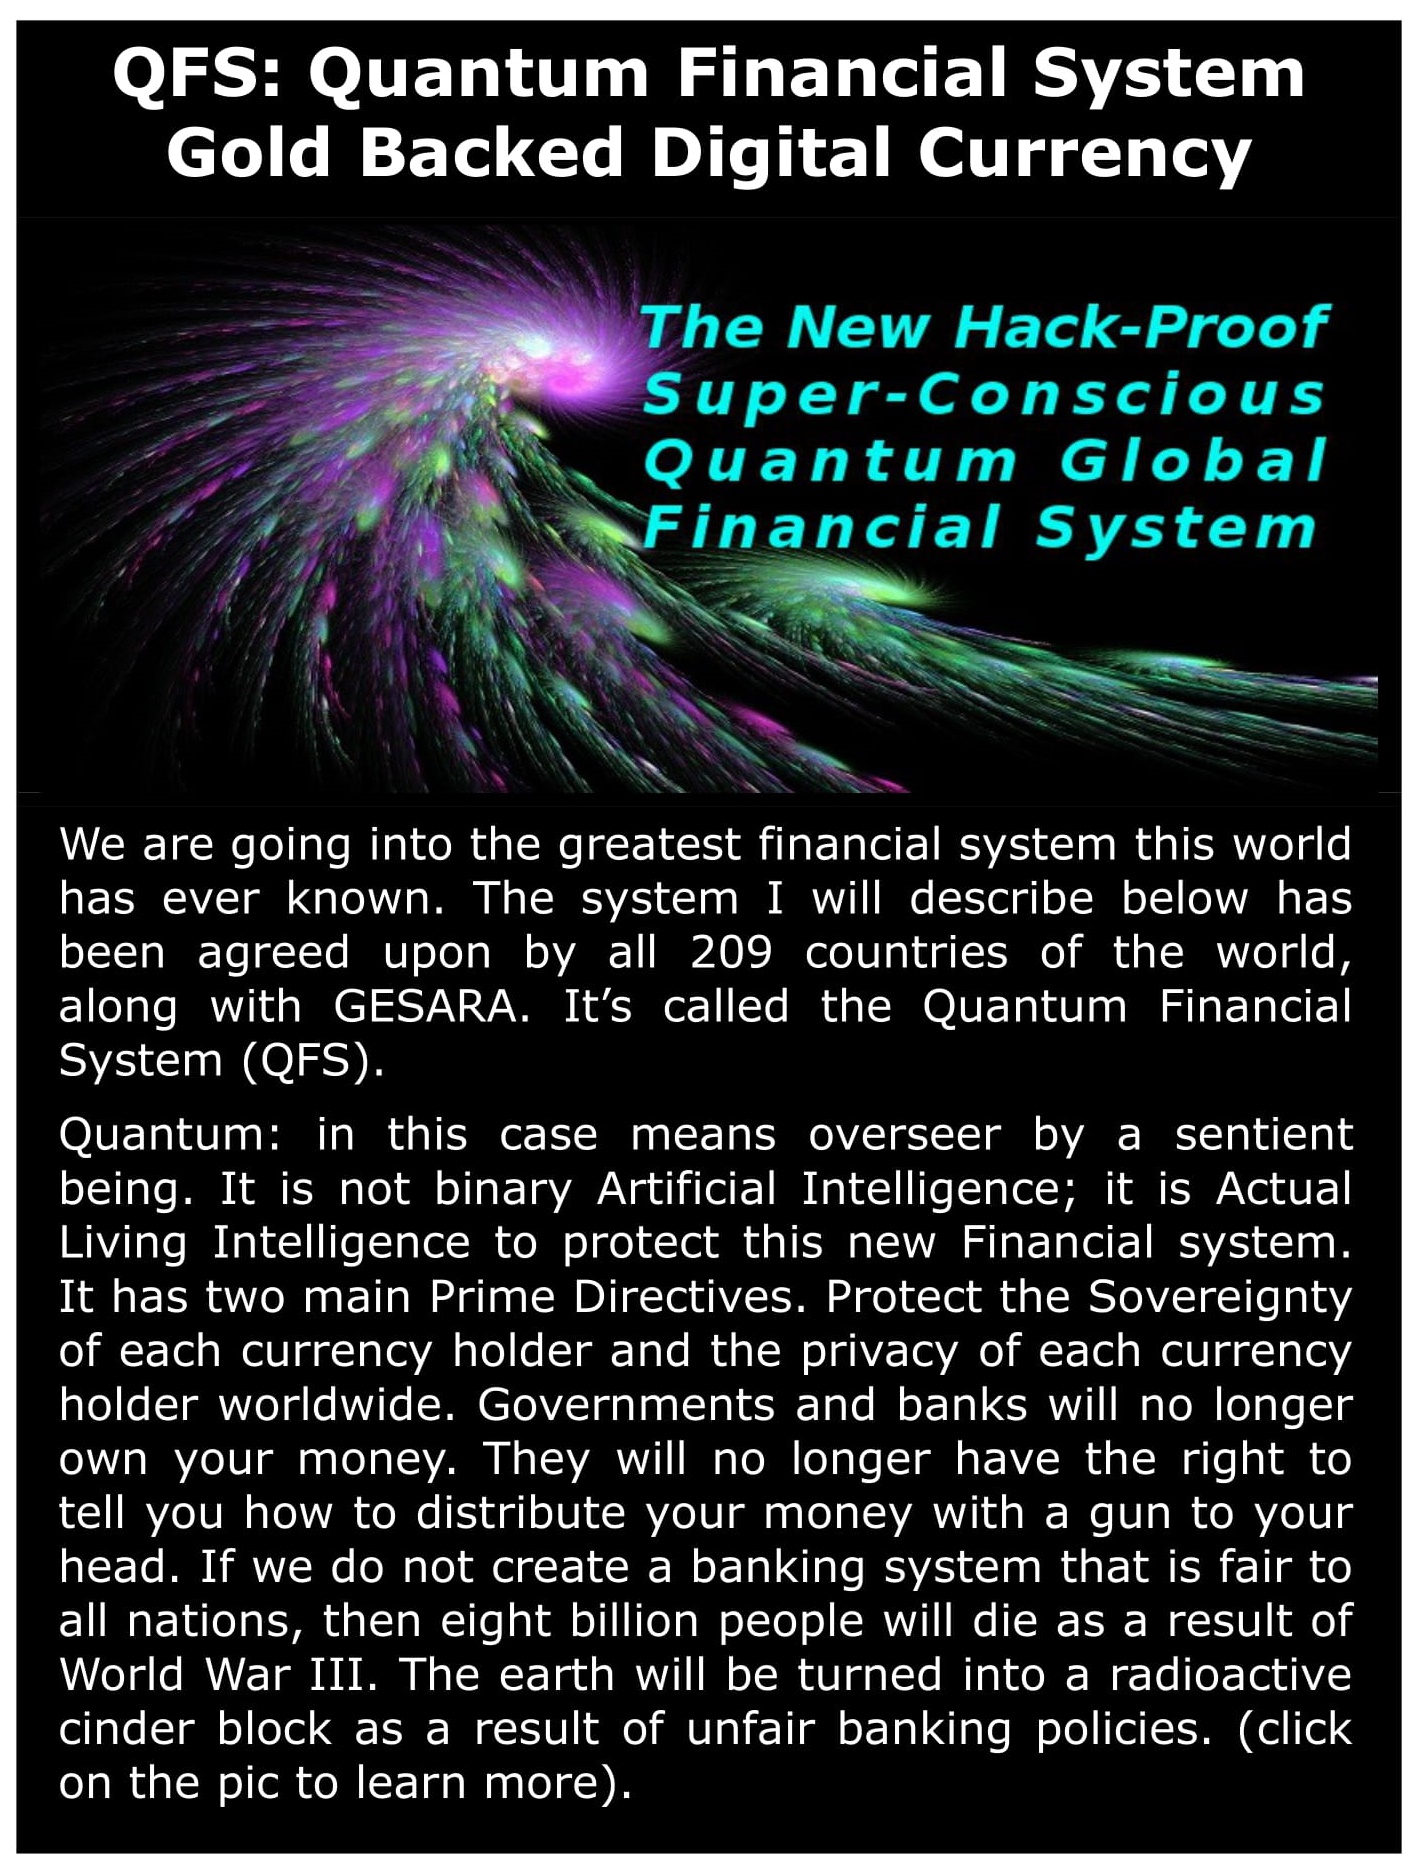 QFS - Quantum Financial System